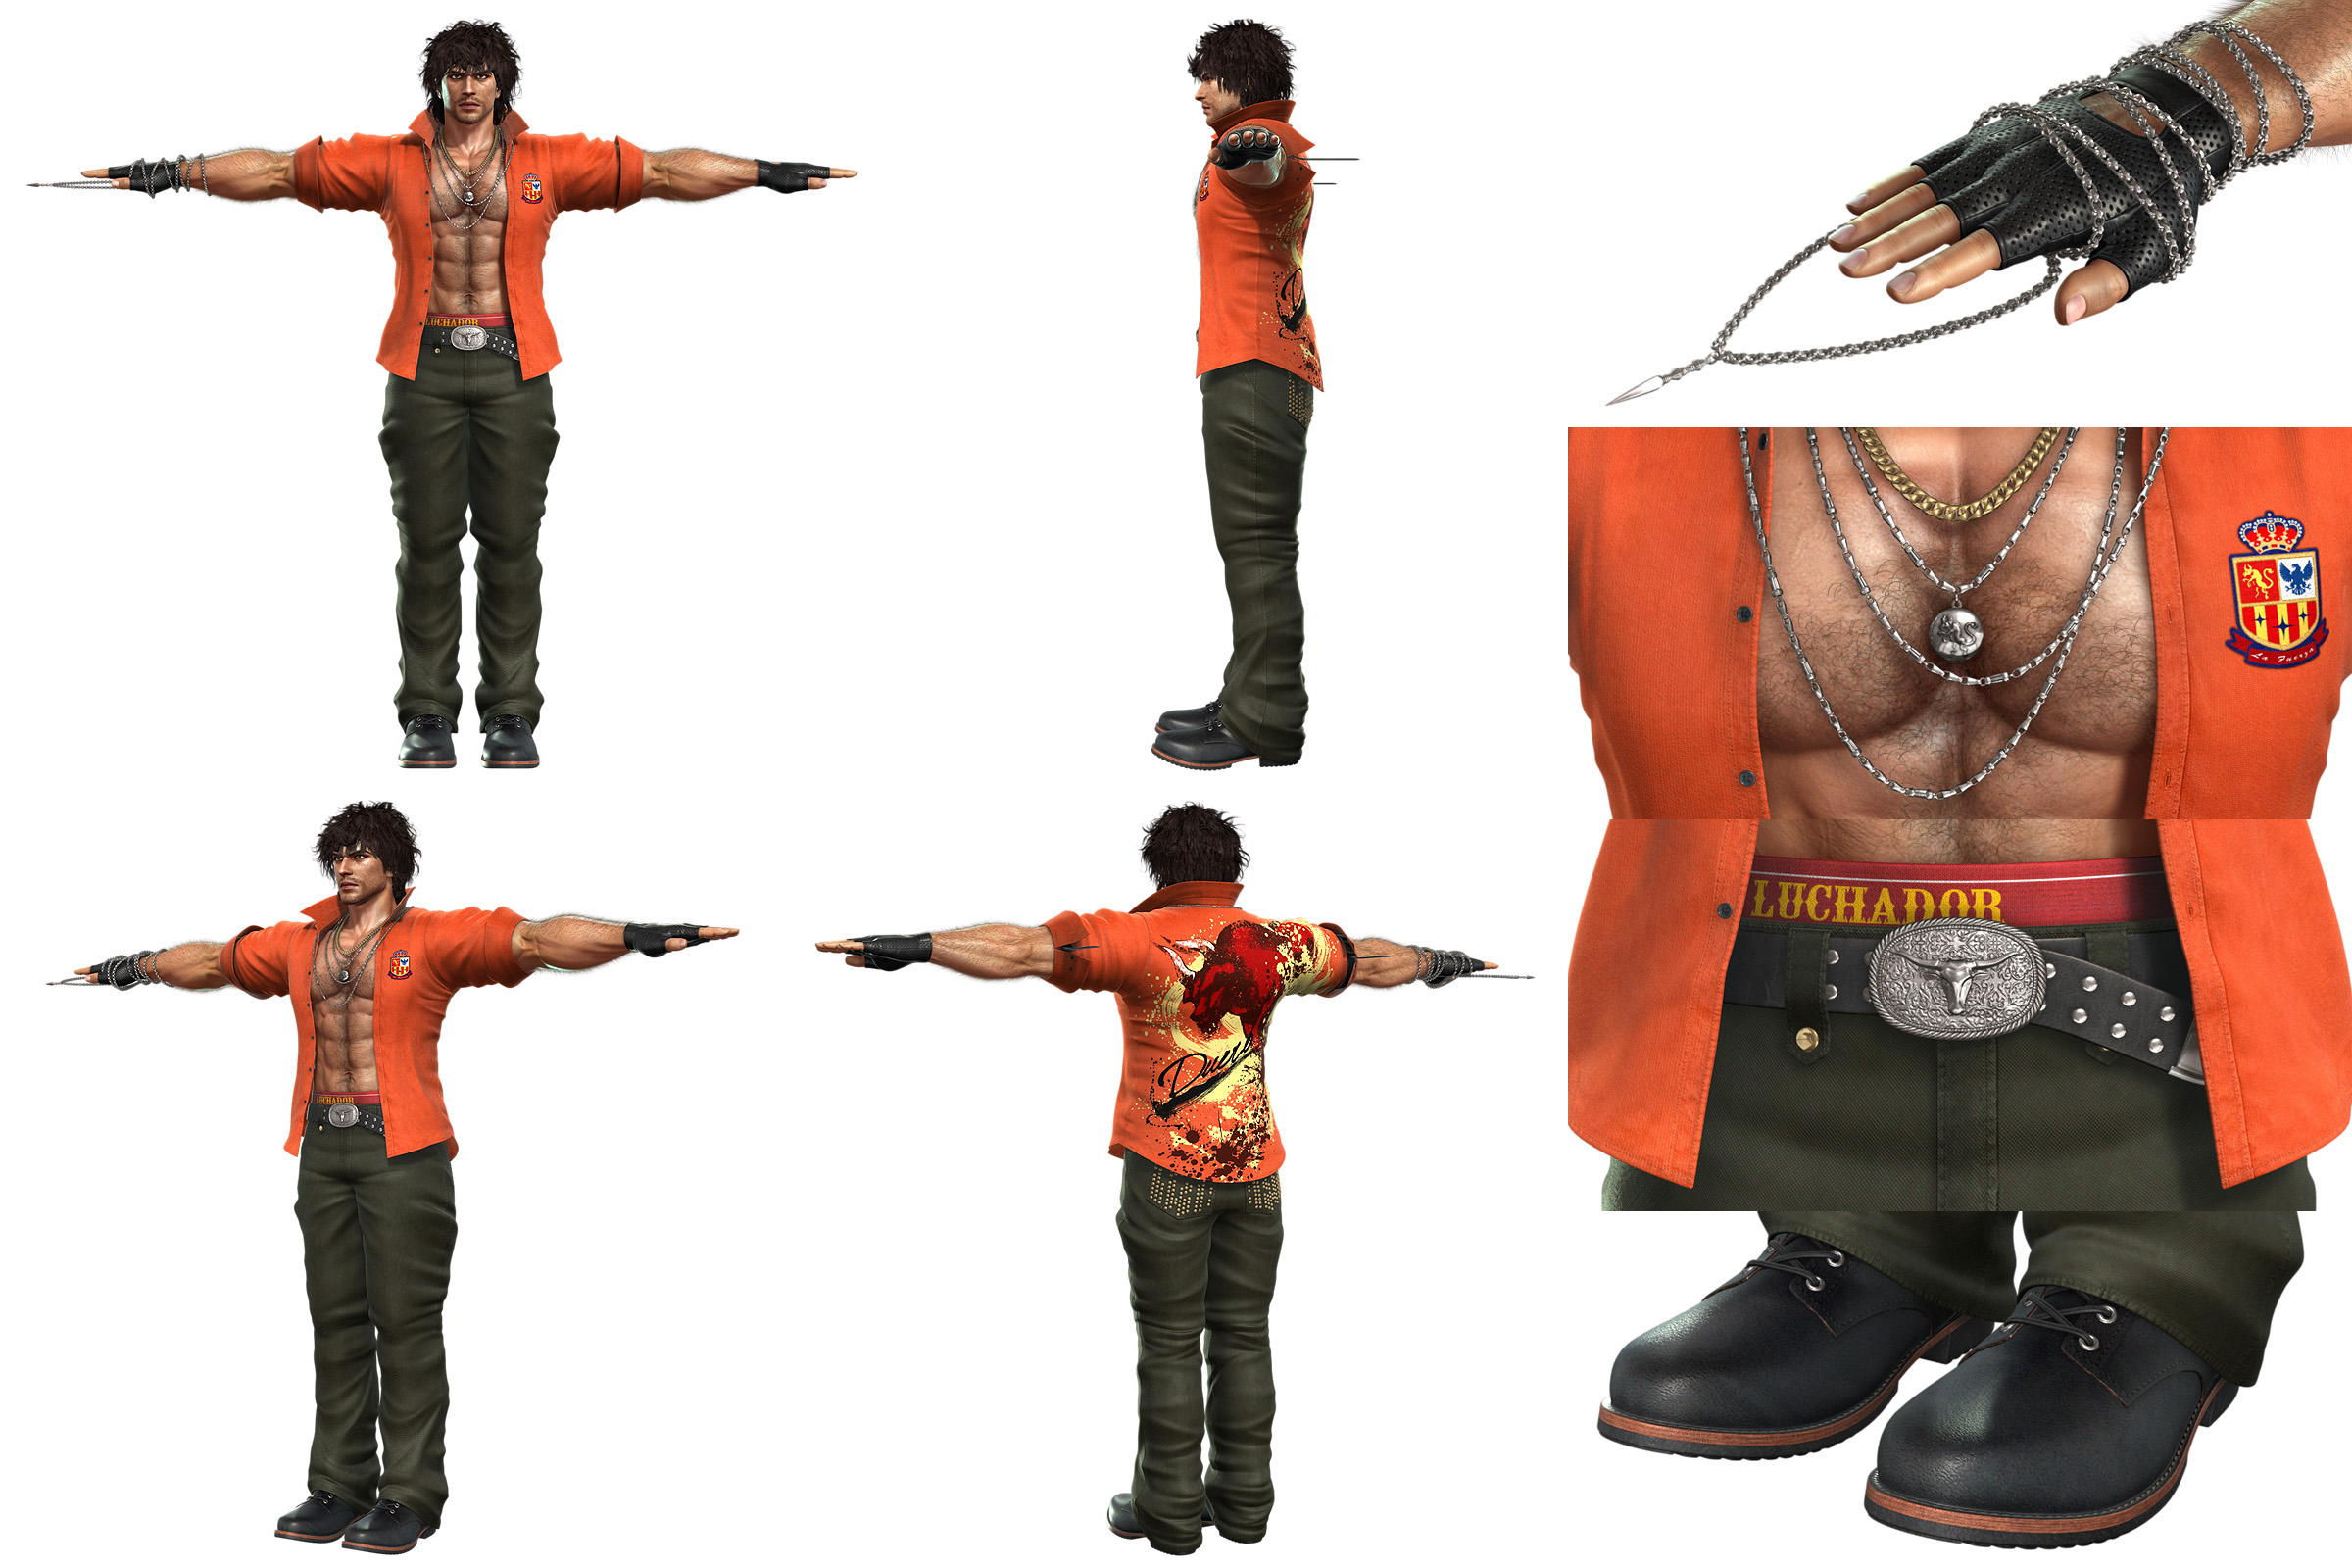 Miguel Caballero Rojo/Outfits, Tekken Wiki